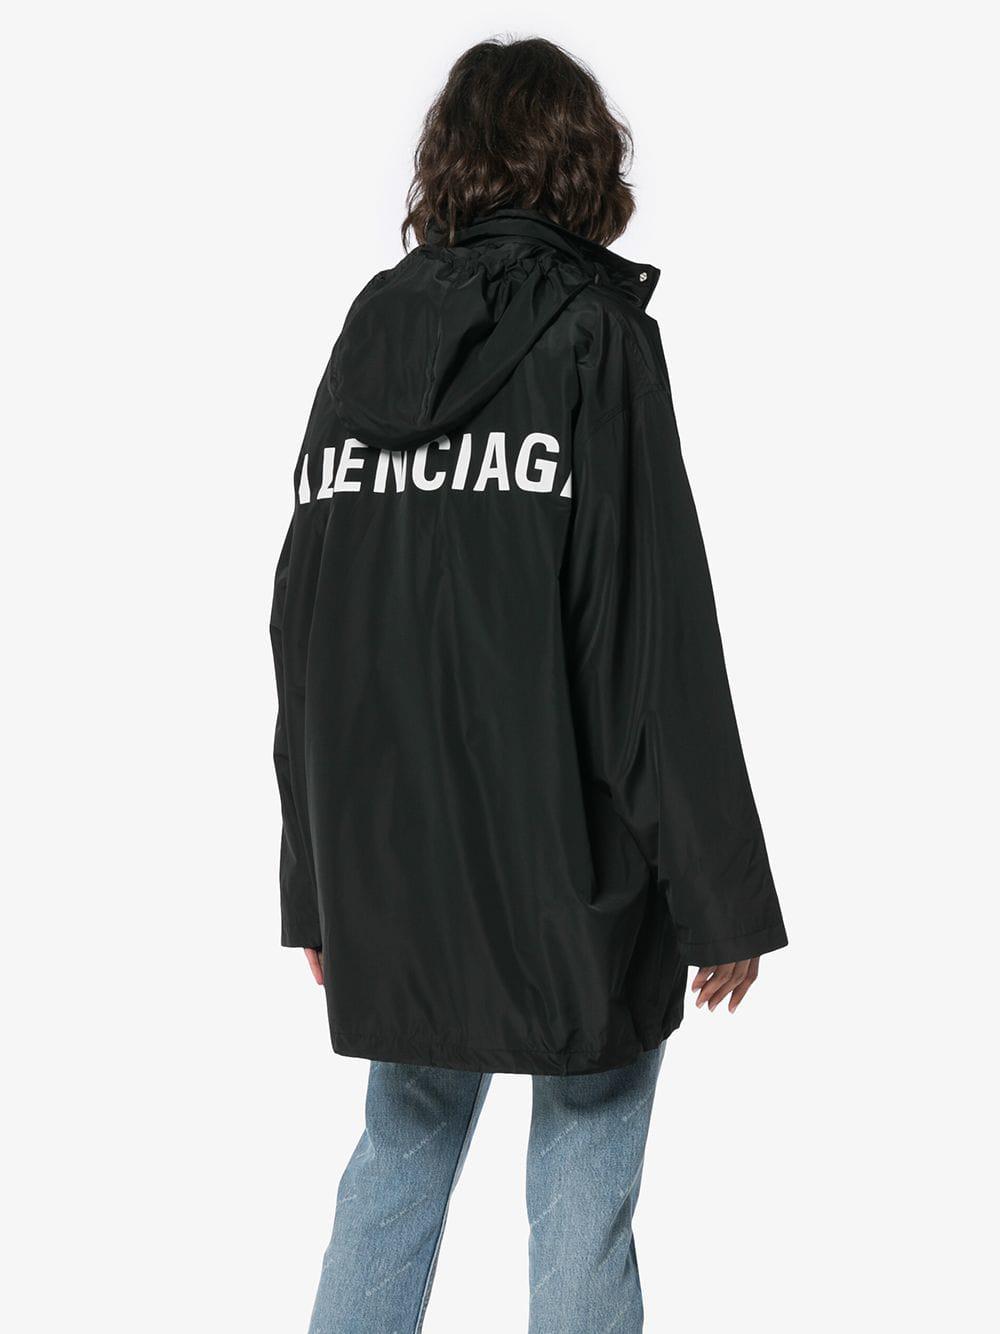 Balenciaga Synthetic Long Print Hooded Windbreaker Jacket in Black - Lyst